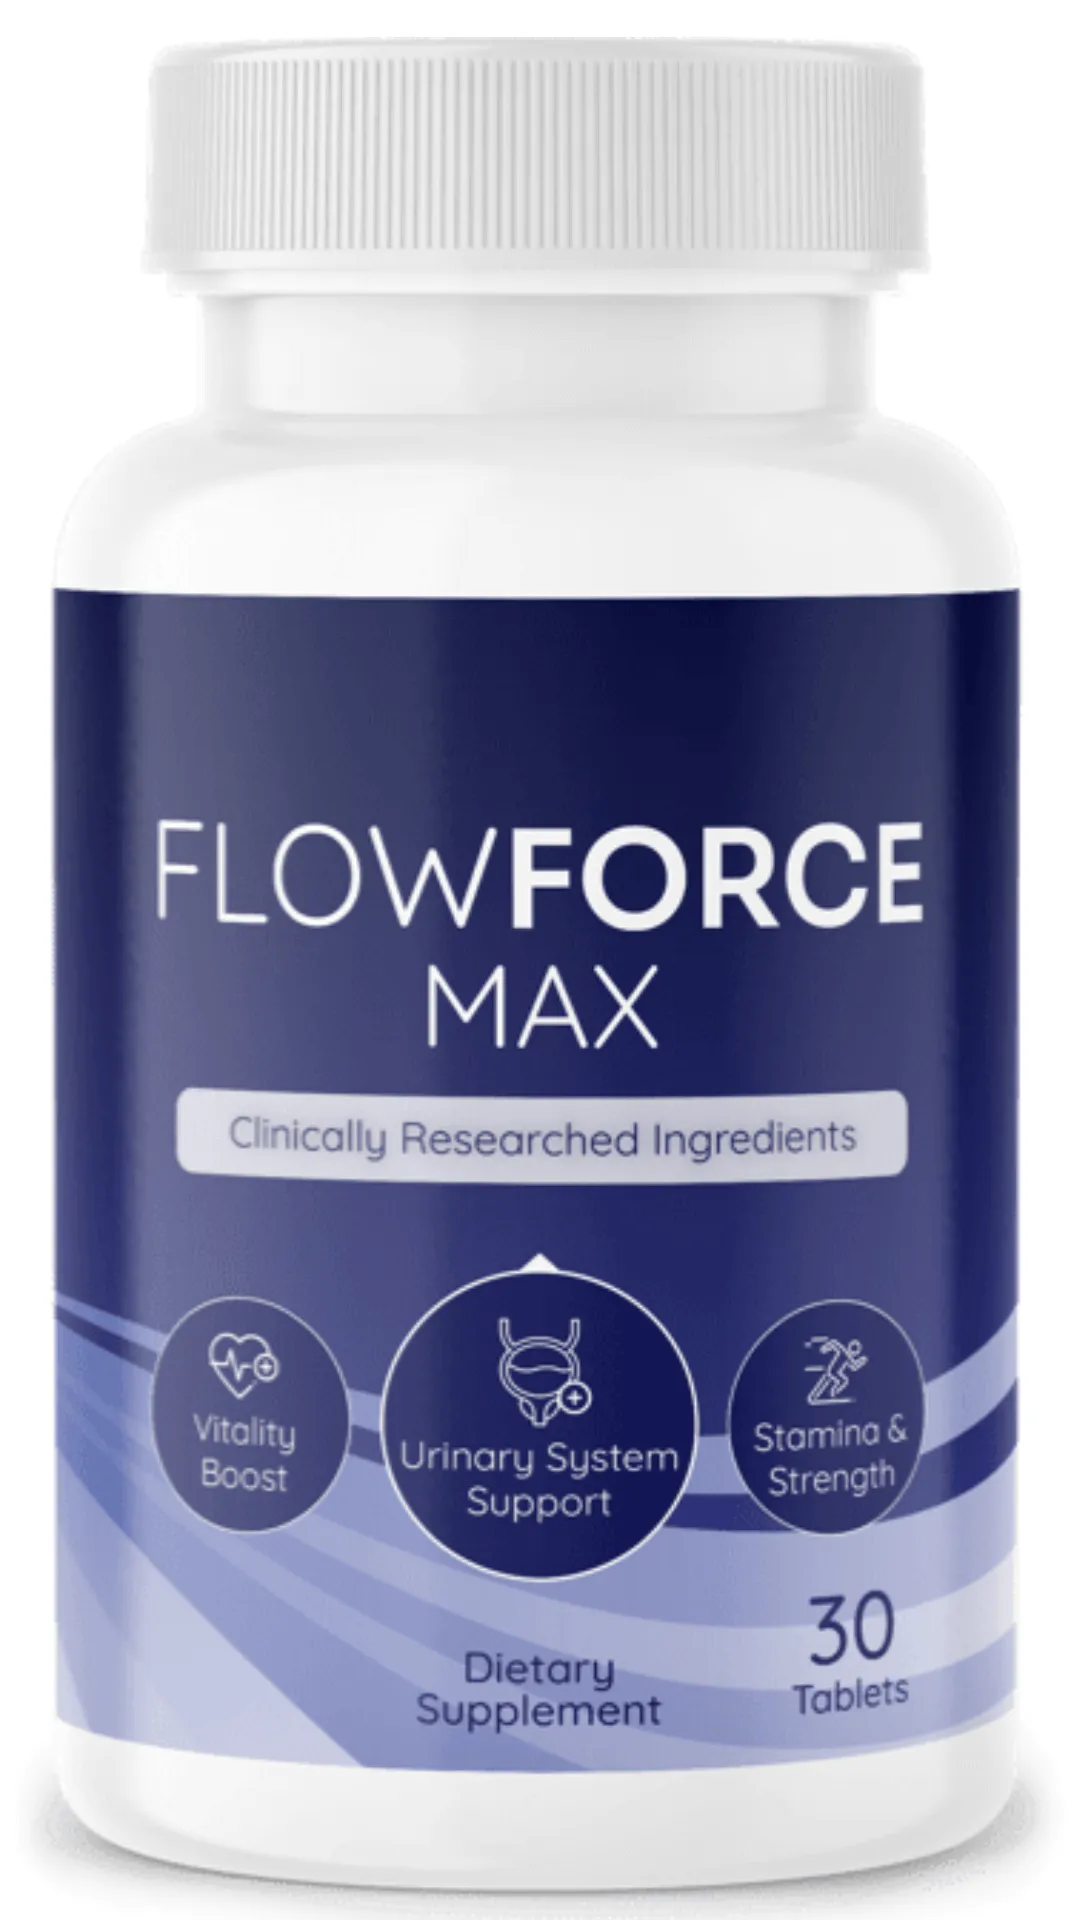 FlowForce Max Supplement bottle buy